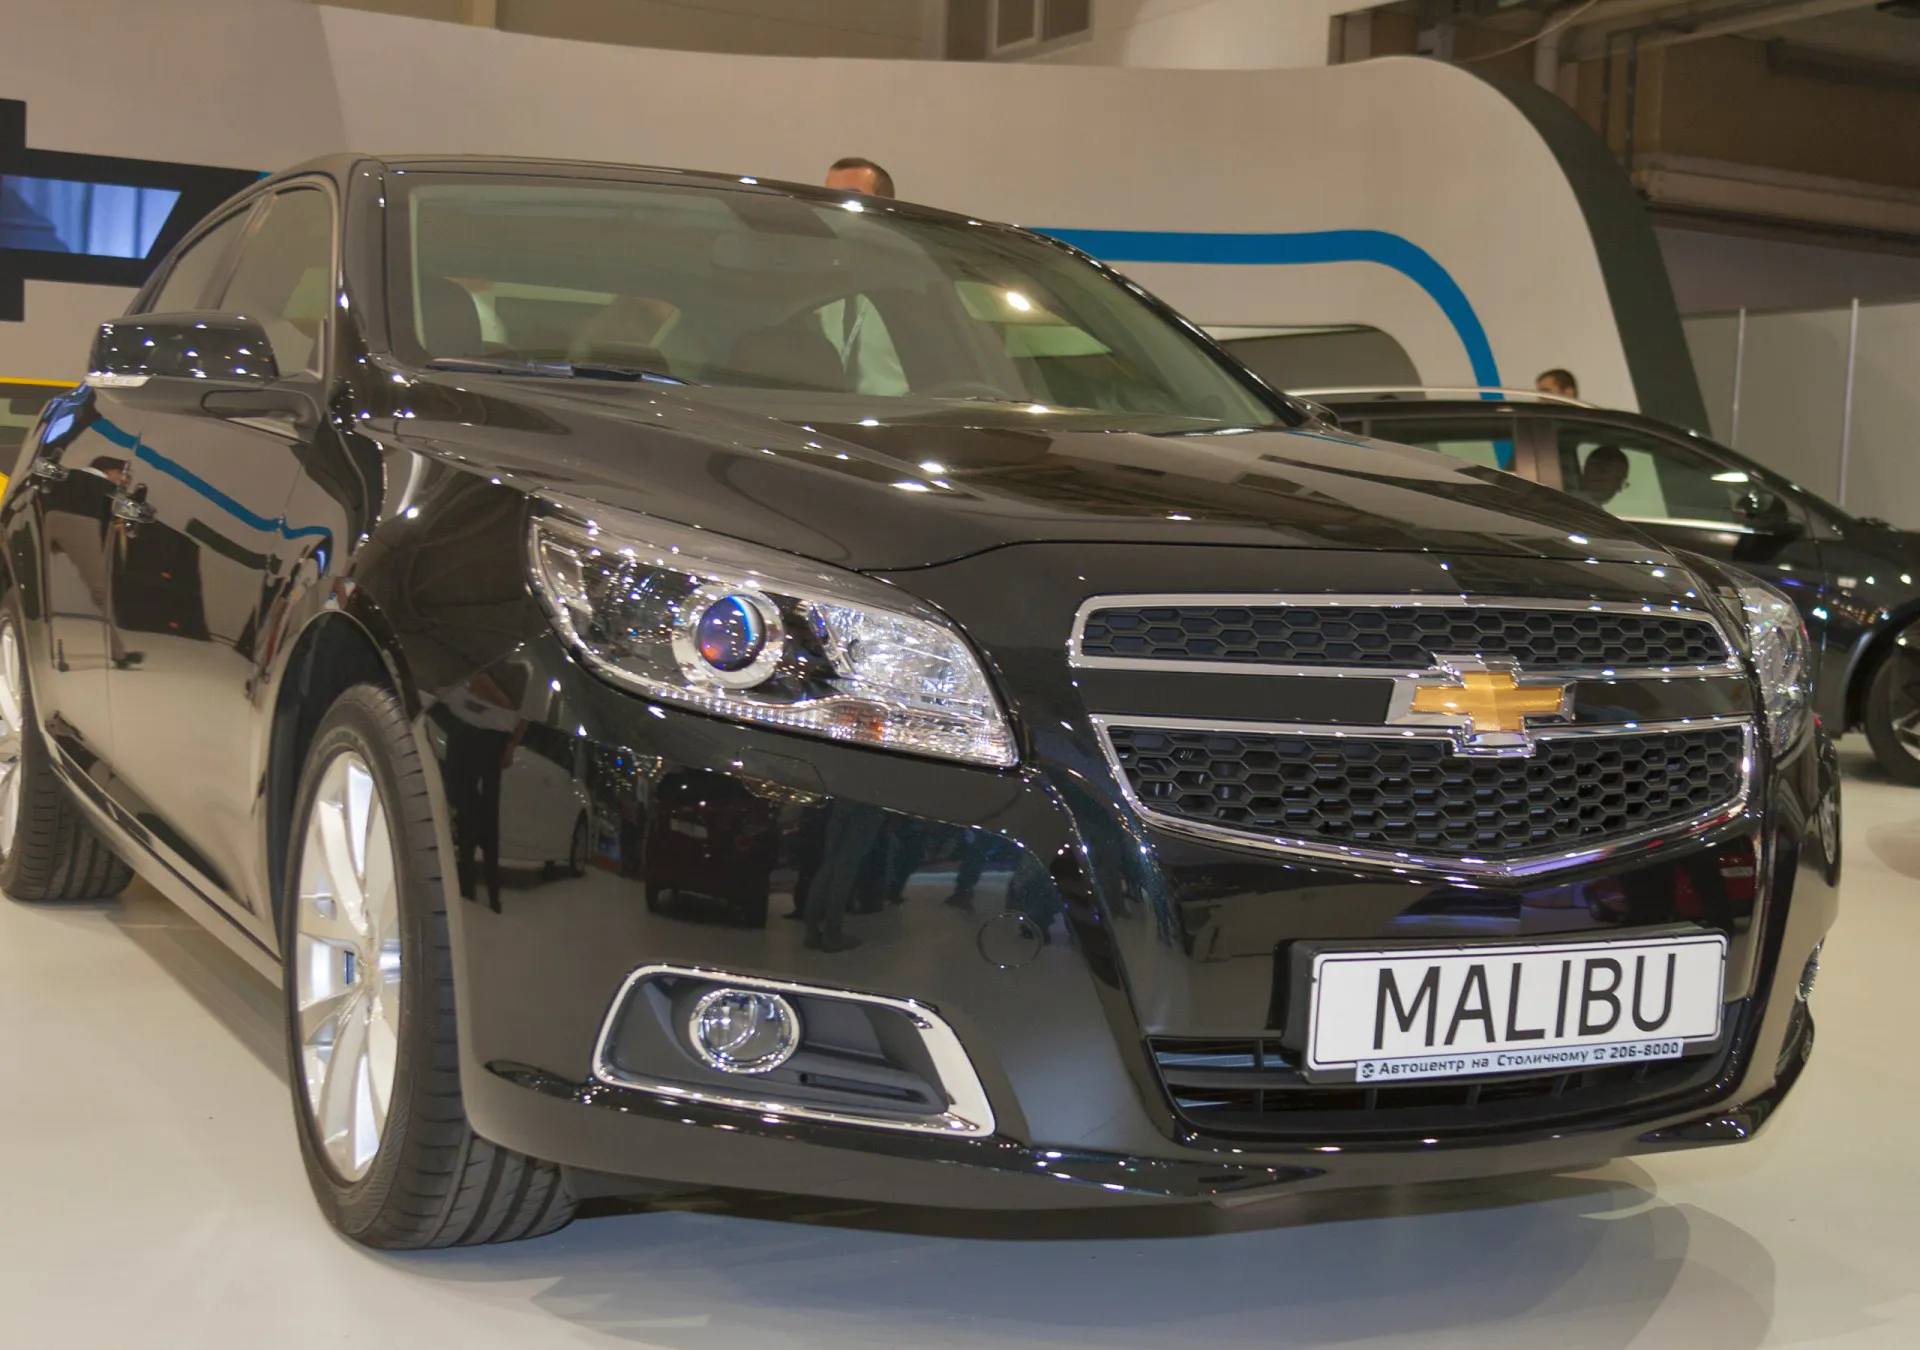 2013 Chevrolet Malibu on display at a car show.